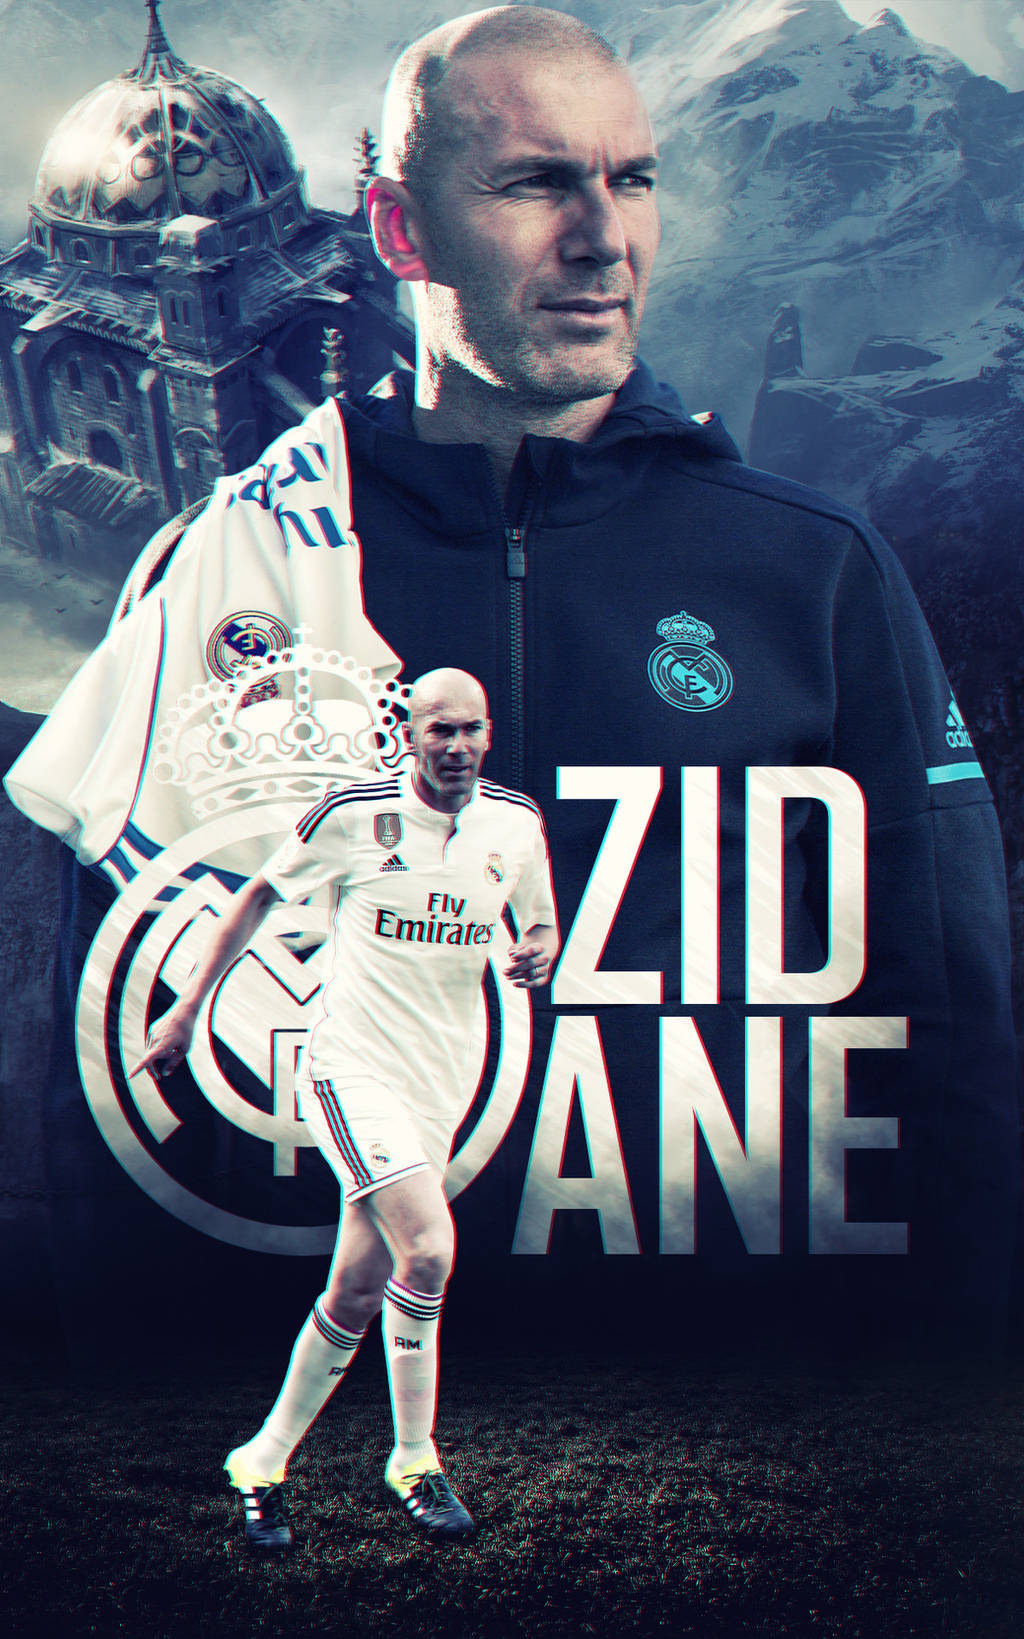 Zinedine Zidane - HD Wallpaper by Achu17 on DeviantArt